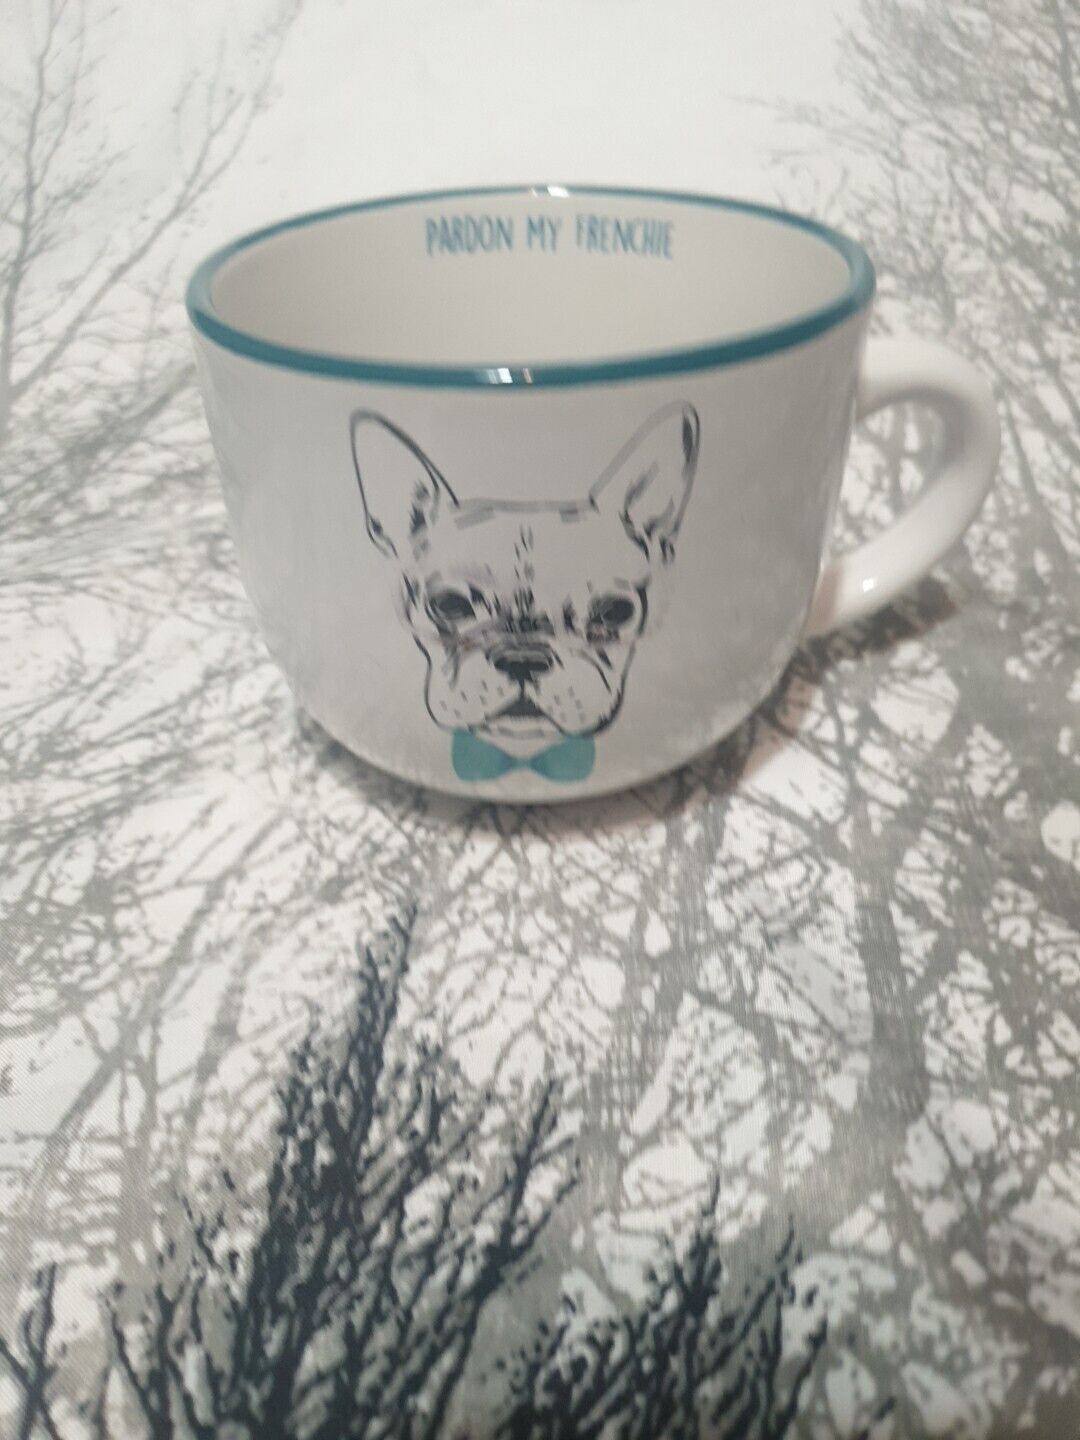 Pardon My Frenchie Coffee Mug Cup 16 Oz White French Bulldog Bowtie Glasses